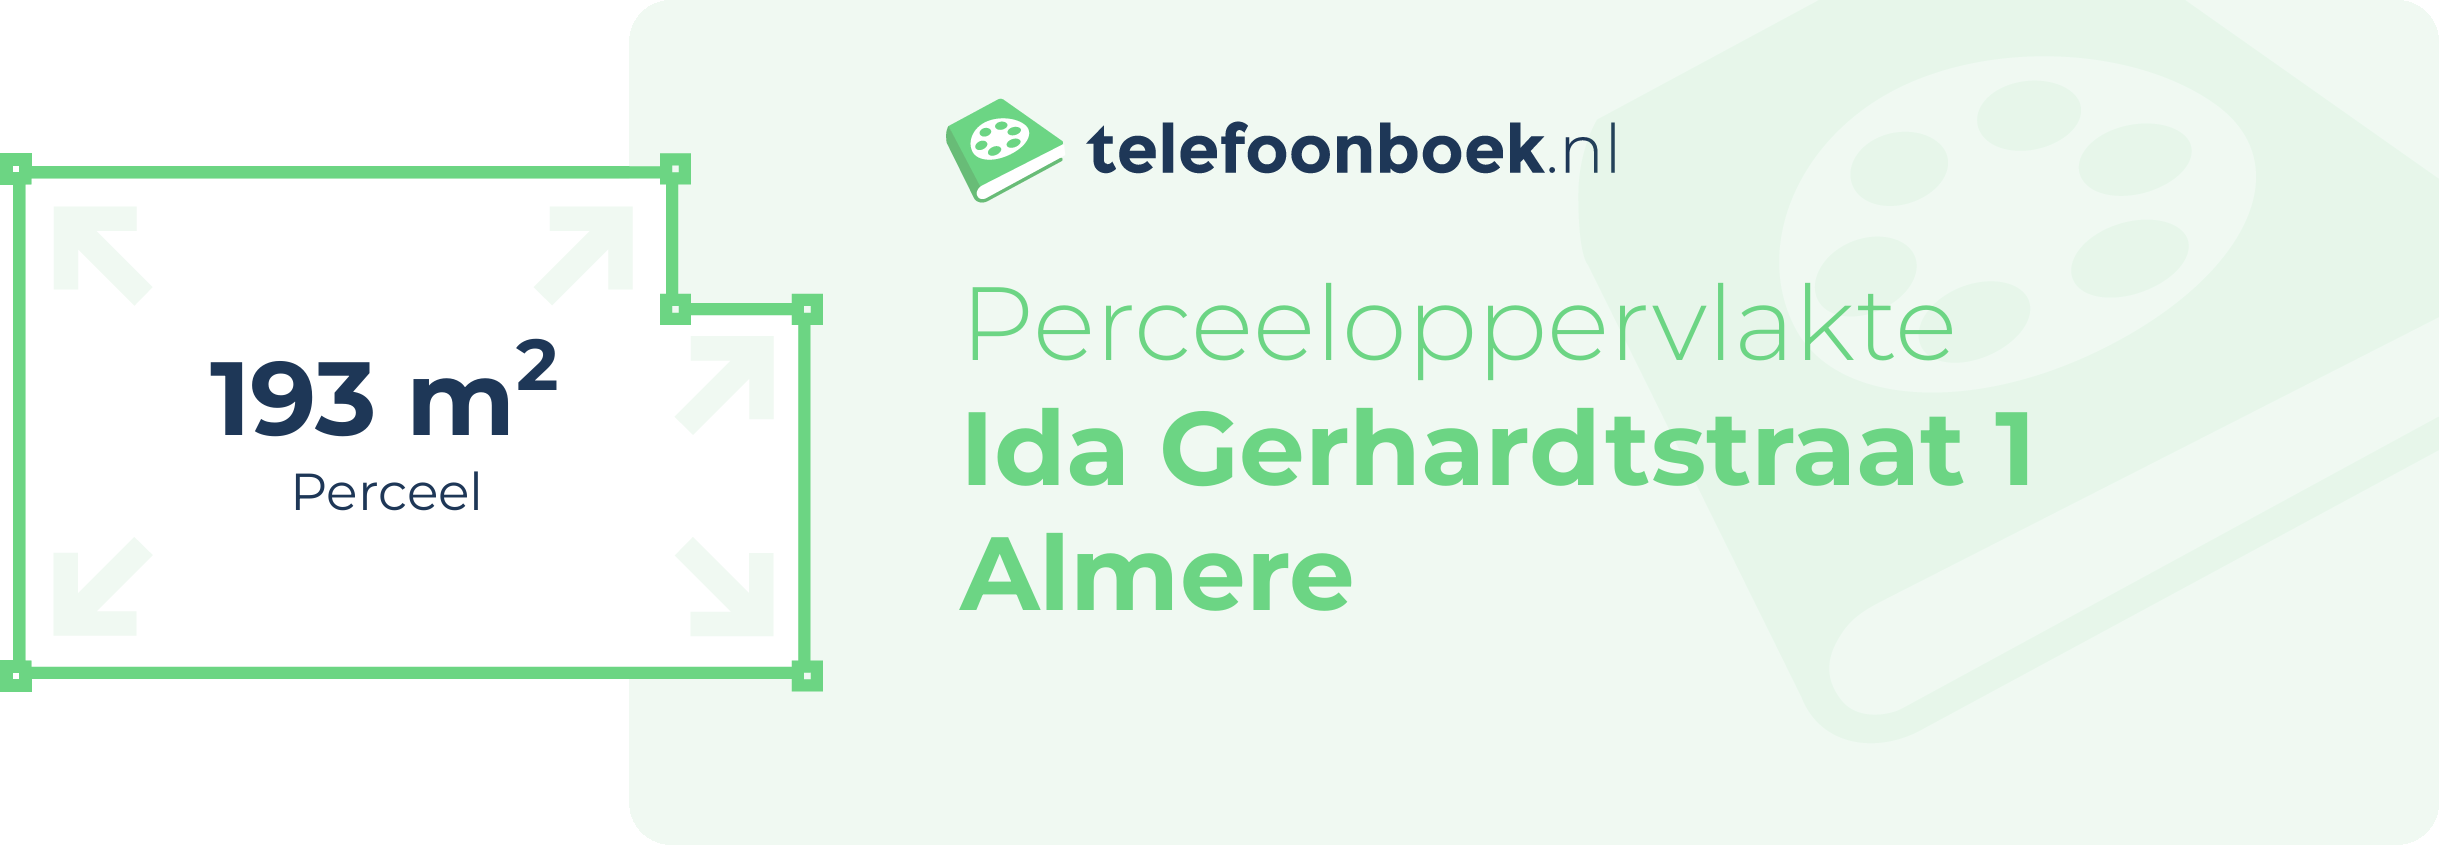 Perceeloppervlakte Ida Gerhardtstraat 1 Almere